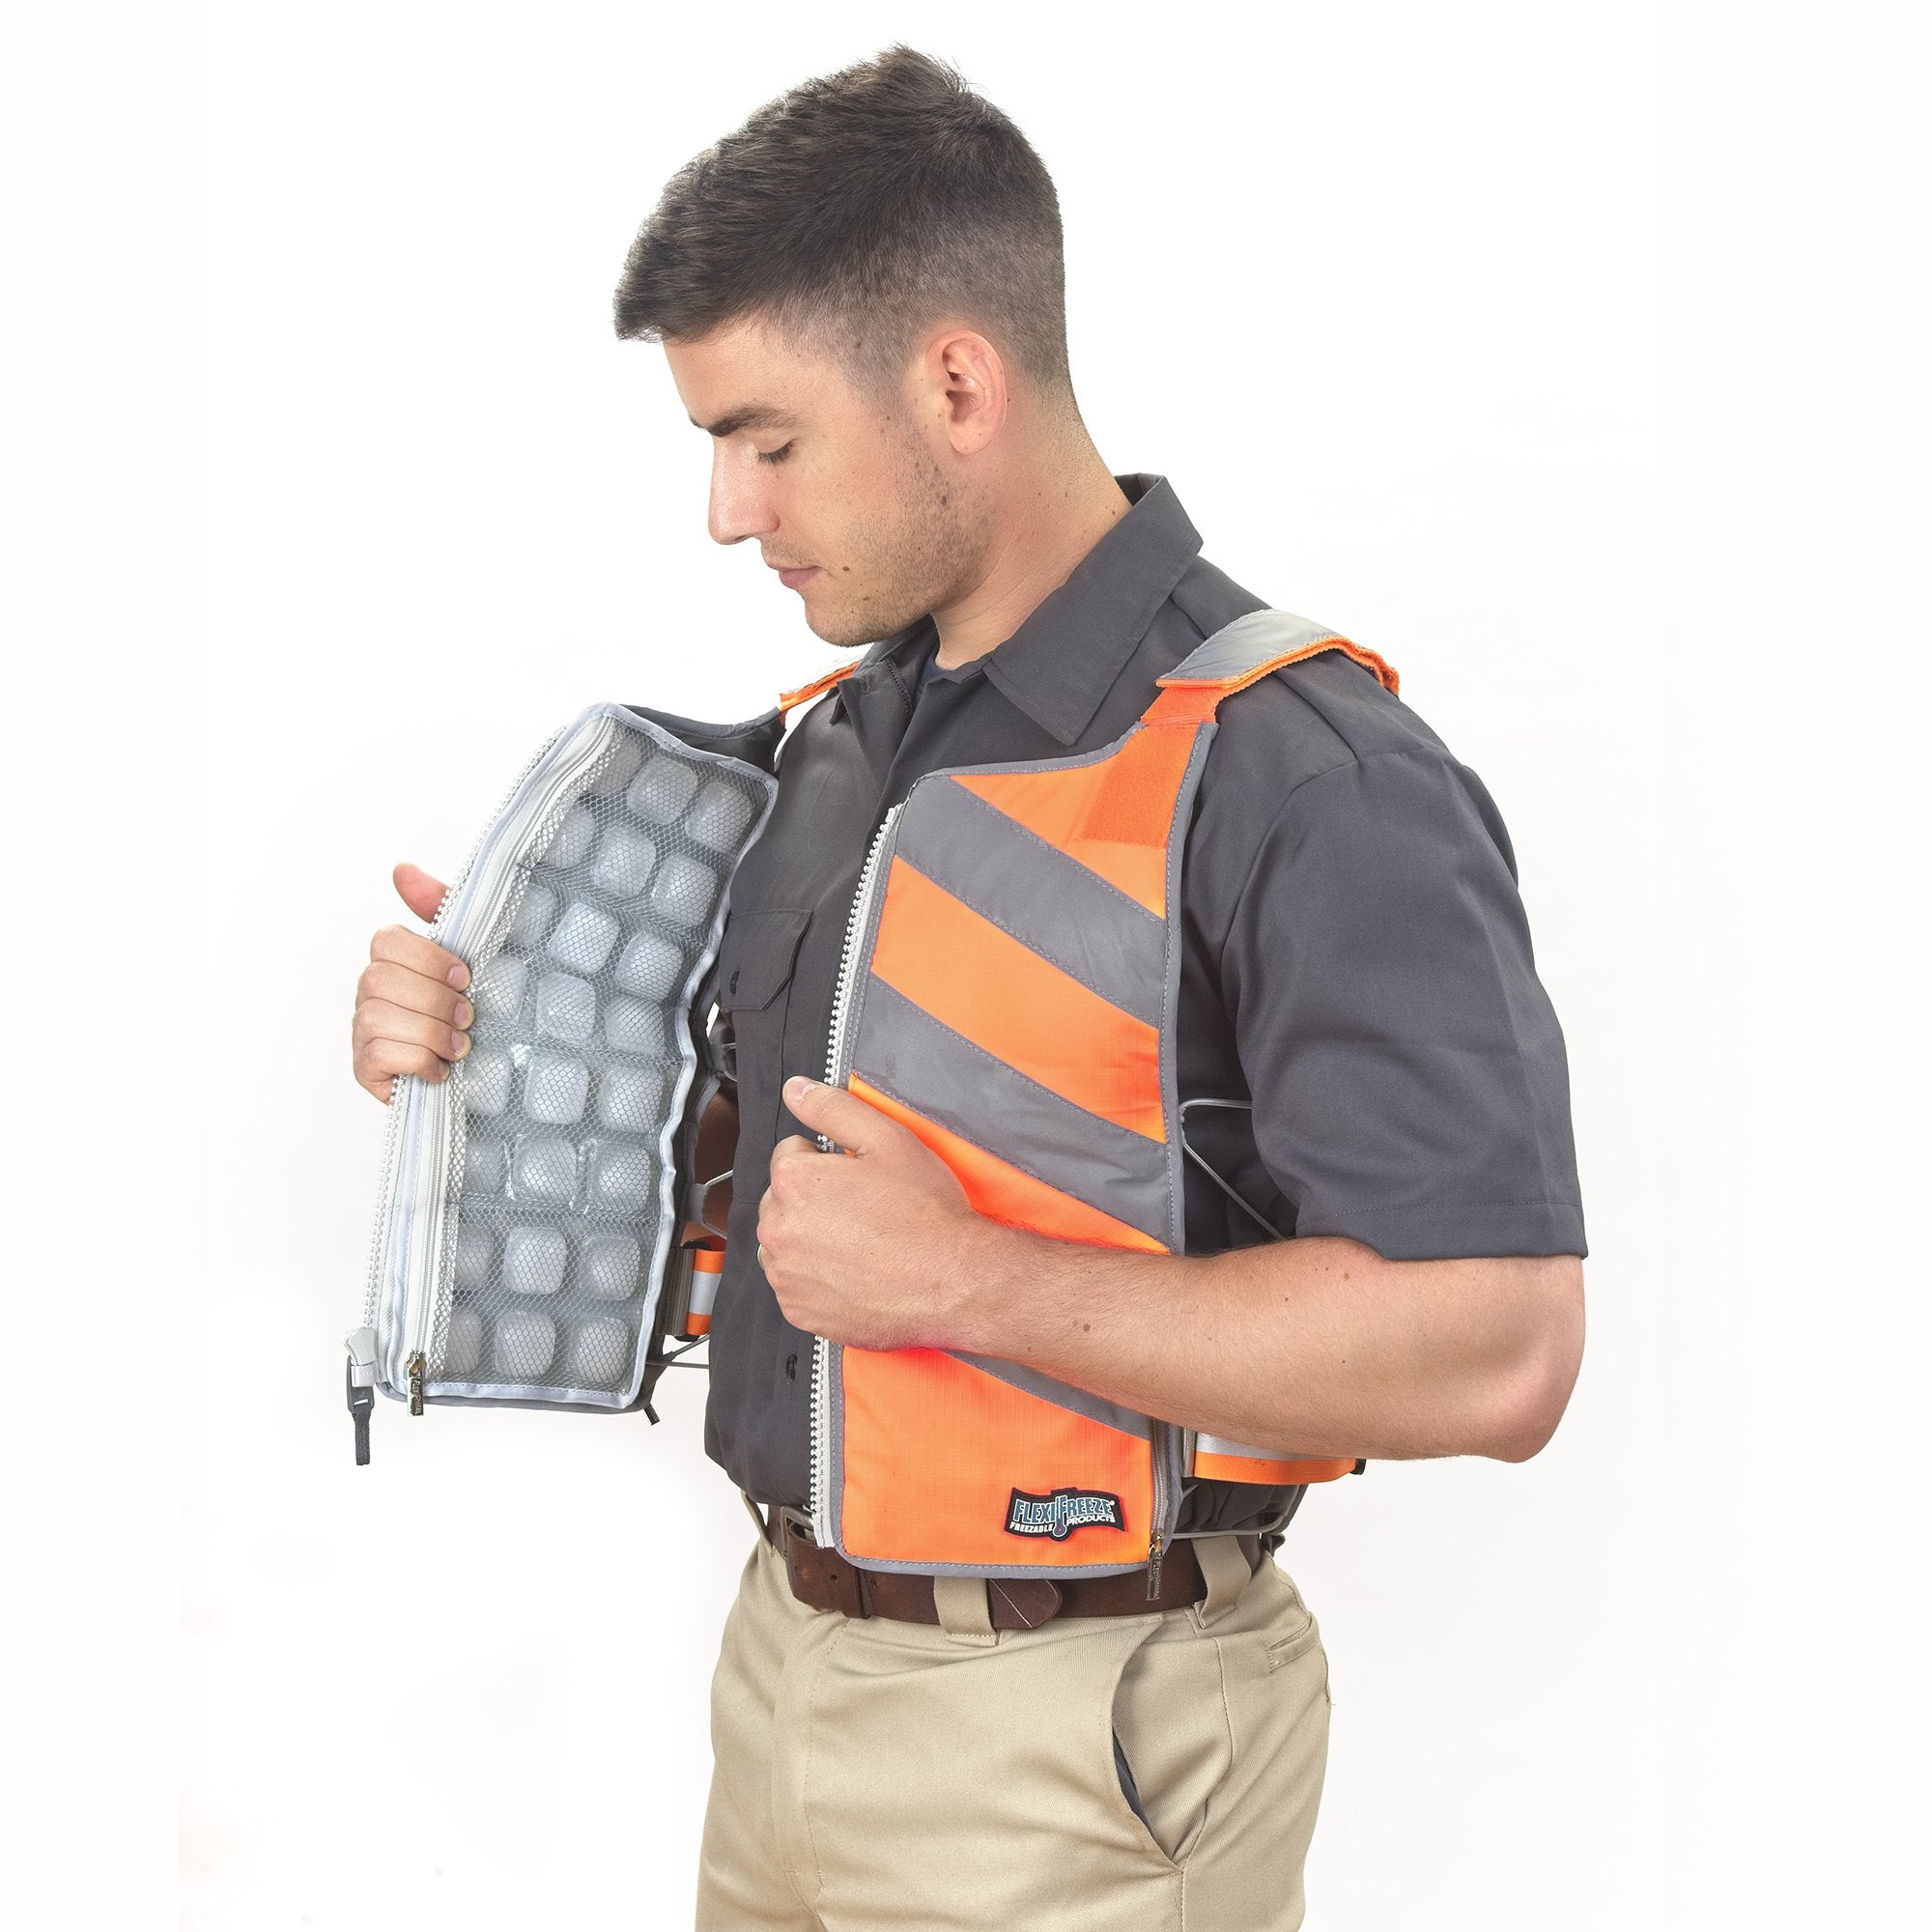 Man wearing FlexiFreeze Professional Series Ice Vest - Hi-Vis, orange, vest open with panels visible, front view